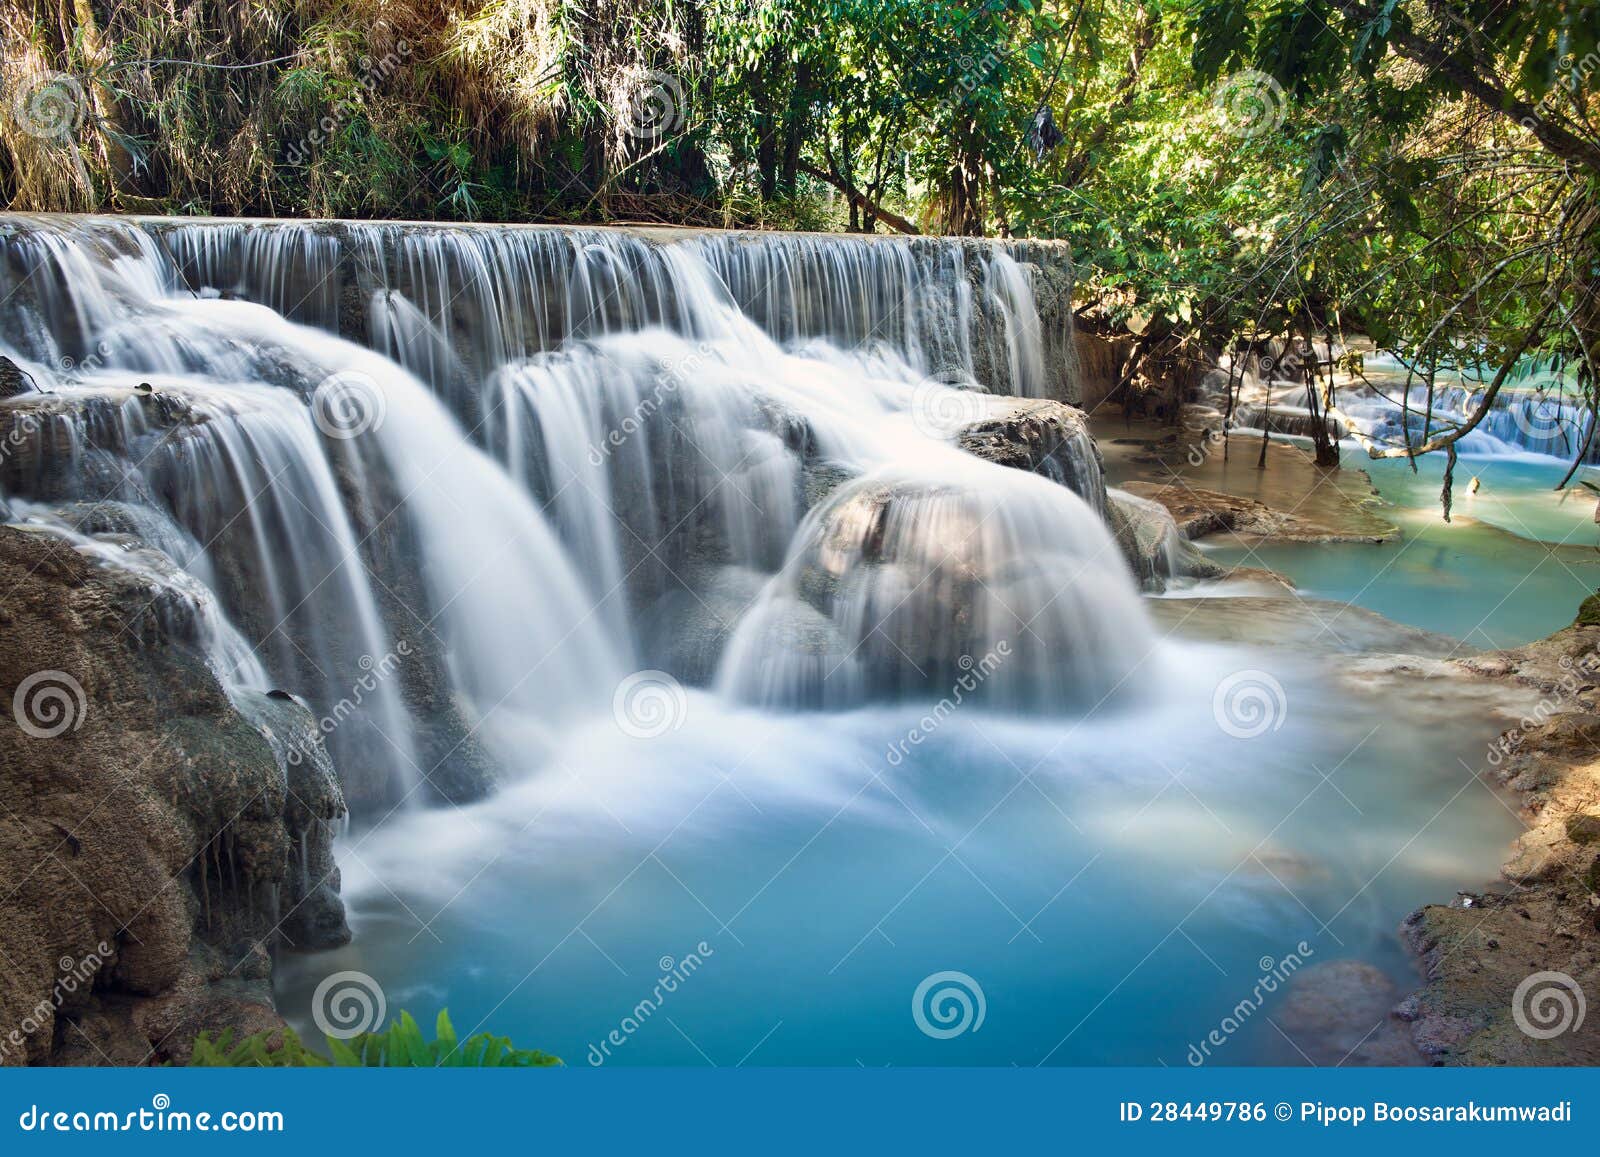 waterfalls of asia